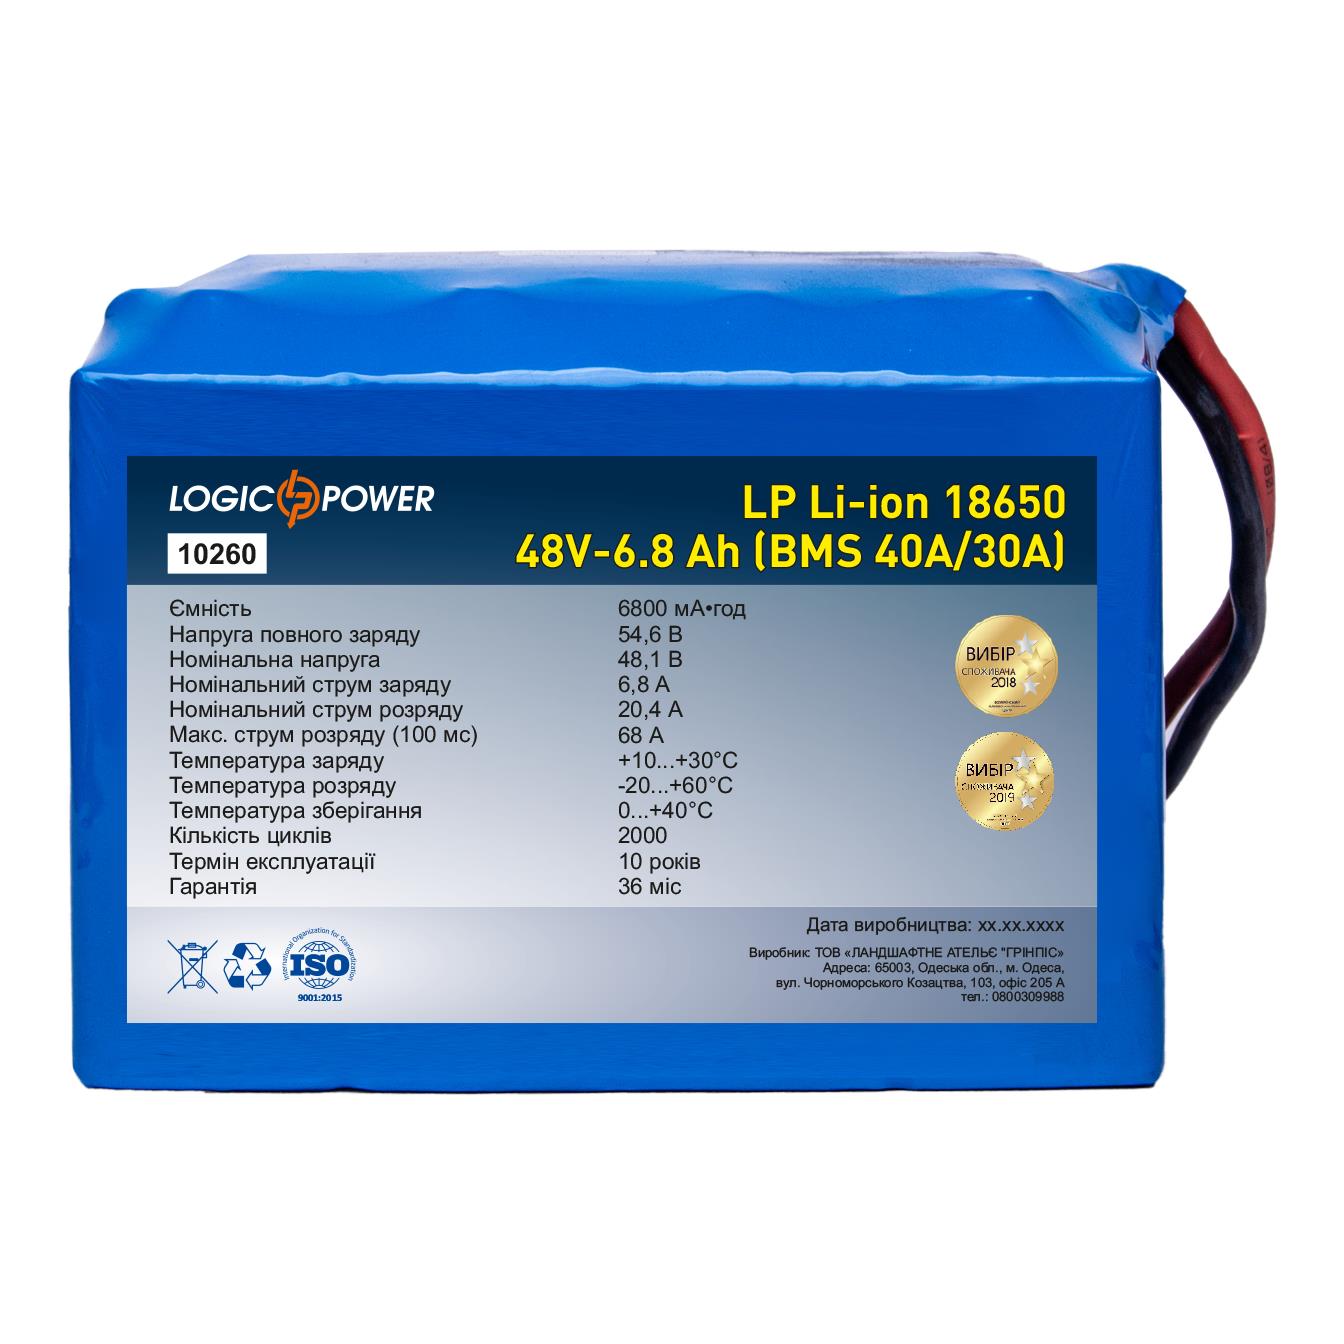 Аккумулятор литий-ионный LogicPower LP Li-ion 18650 48V - 6.8 Ah (BMS 40A/30А) (10260)